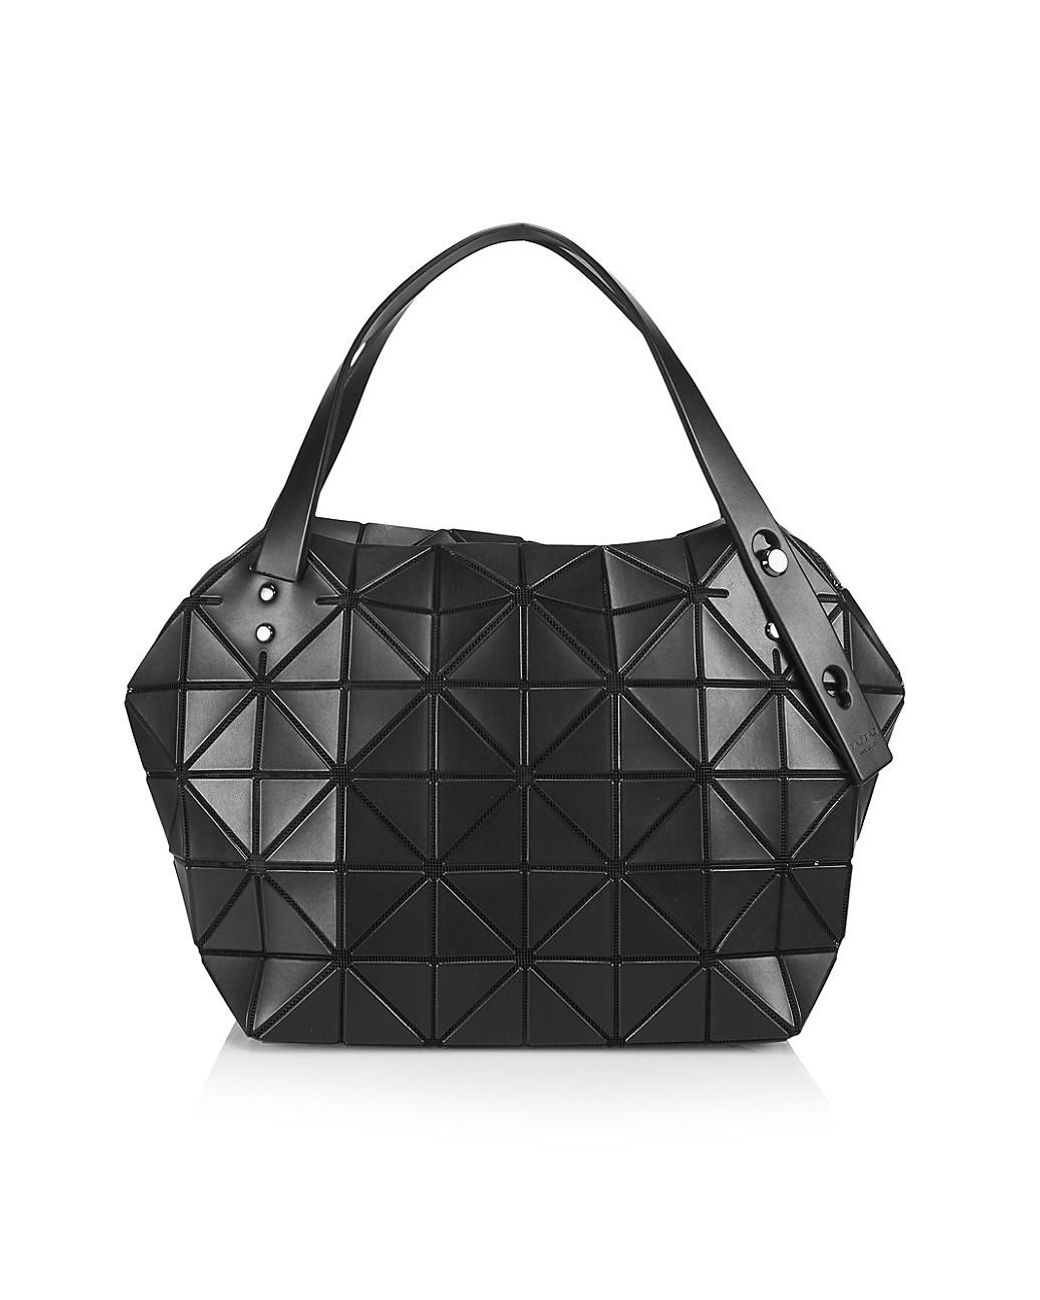 Bao Bao Issey Miyake Synthetic Boston Shoulder Bag in Black - Lyst